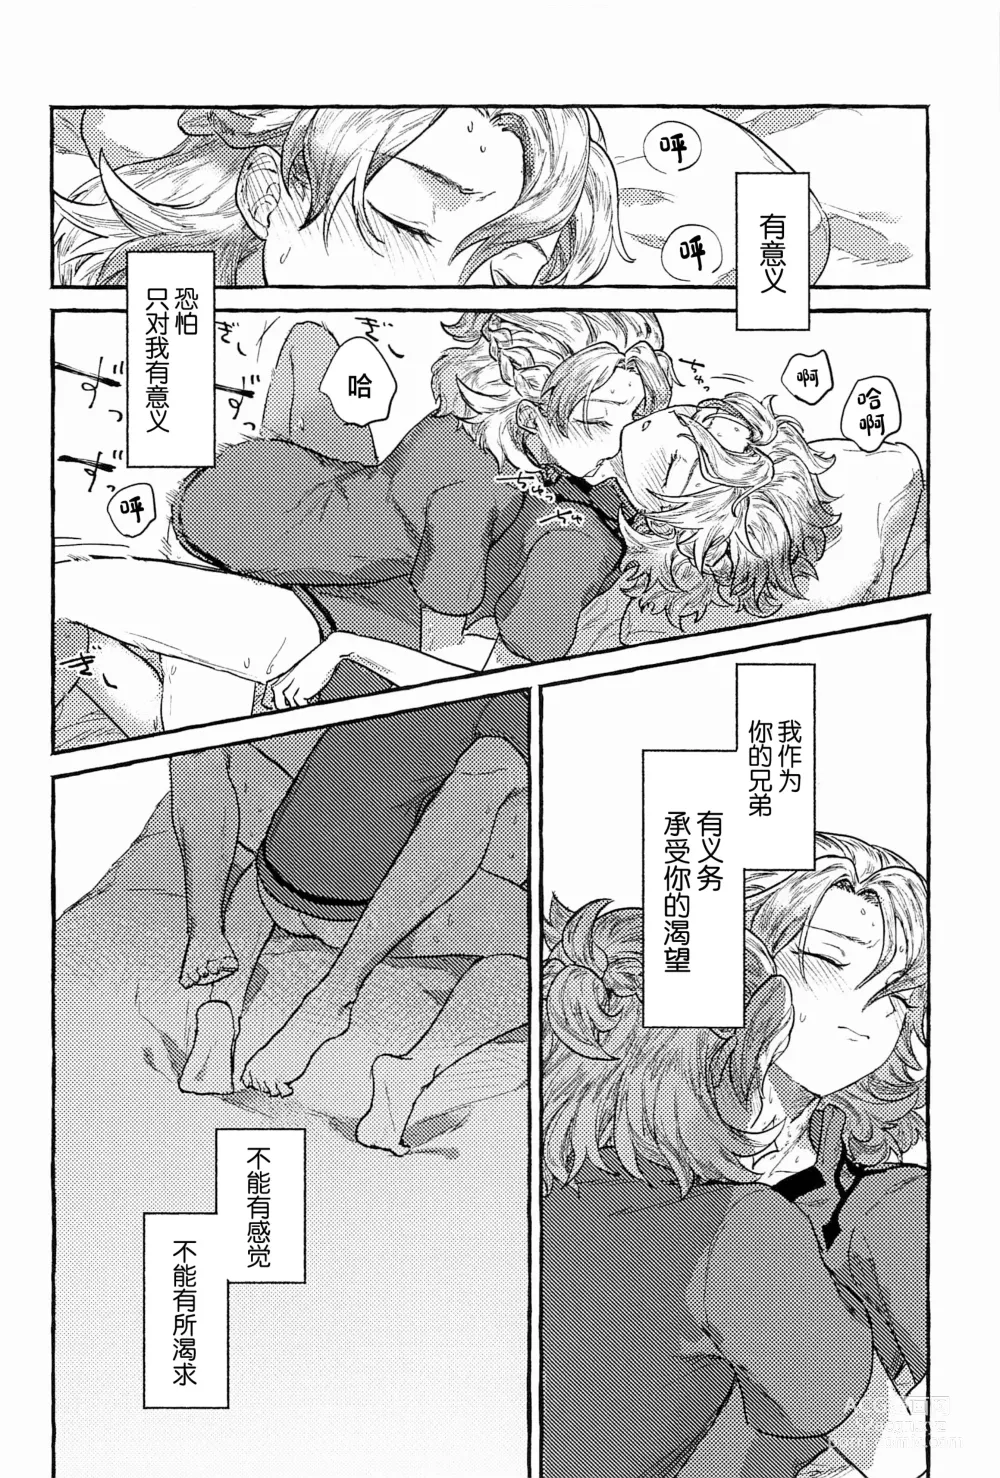 Page 11 of doujinshi Kagami no Awai - Boundary of the mirror